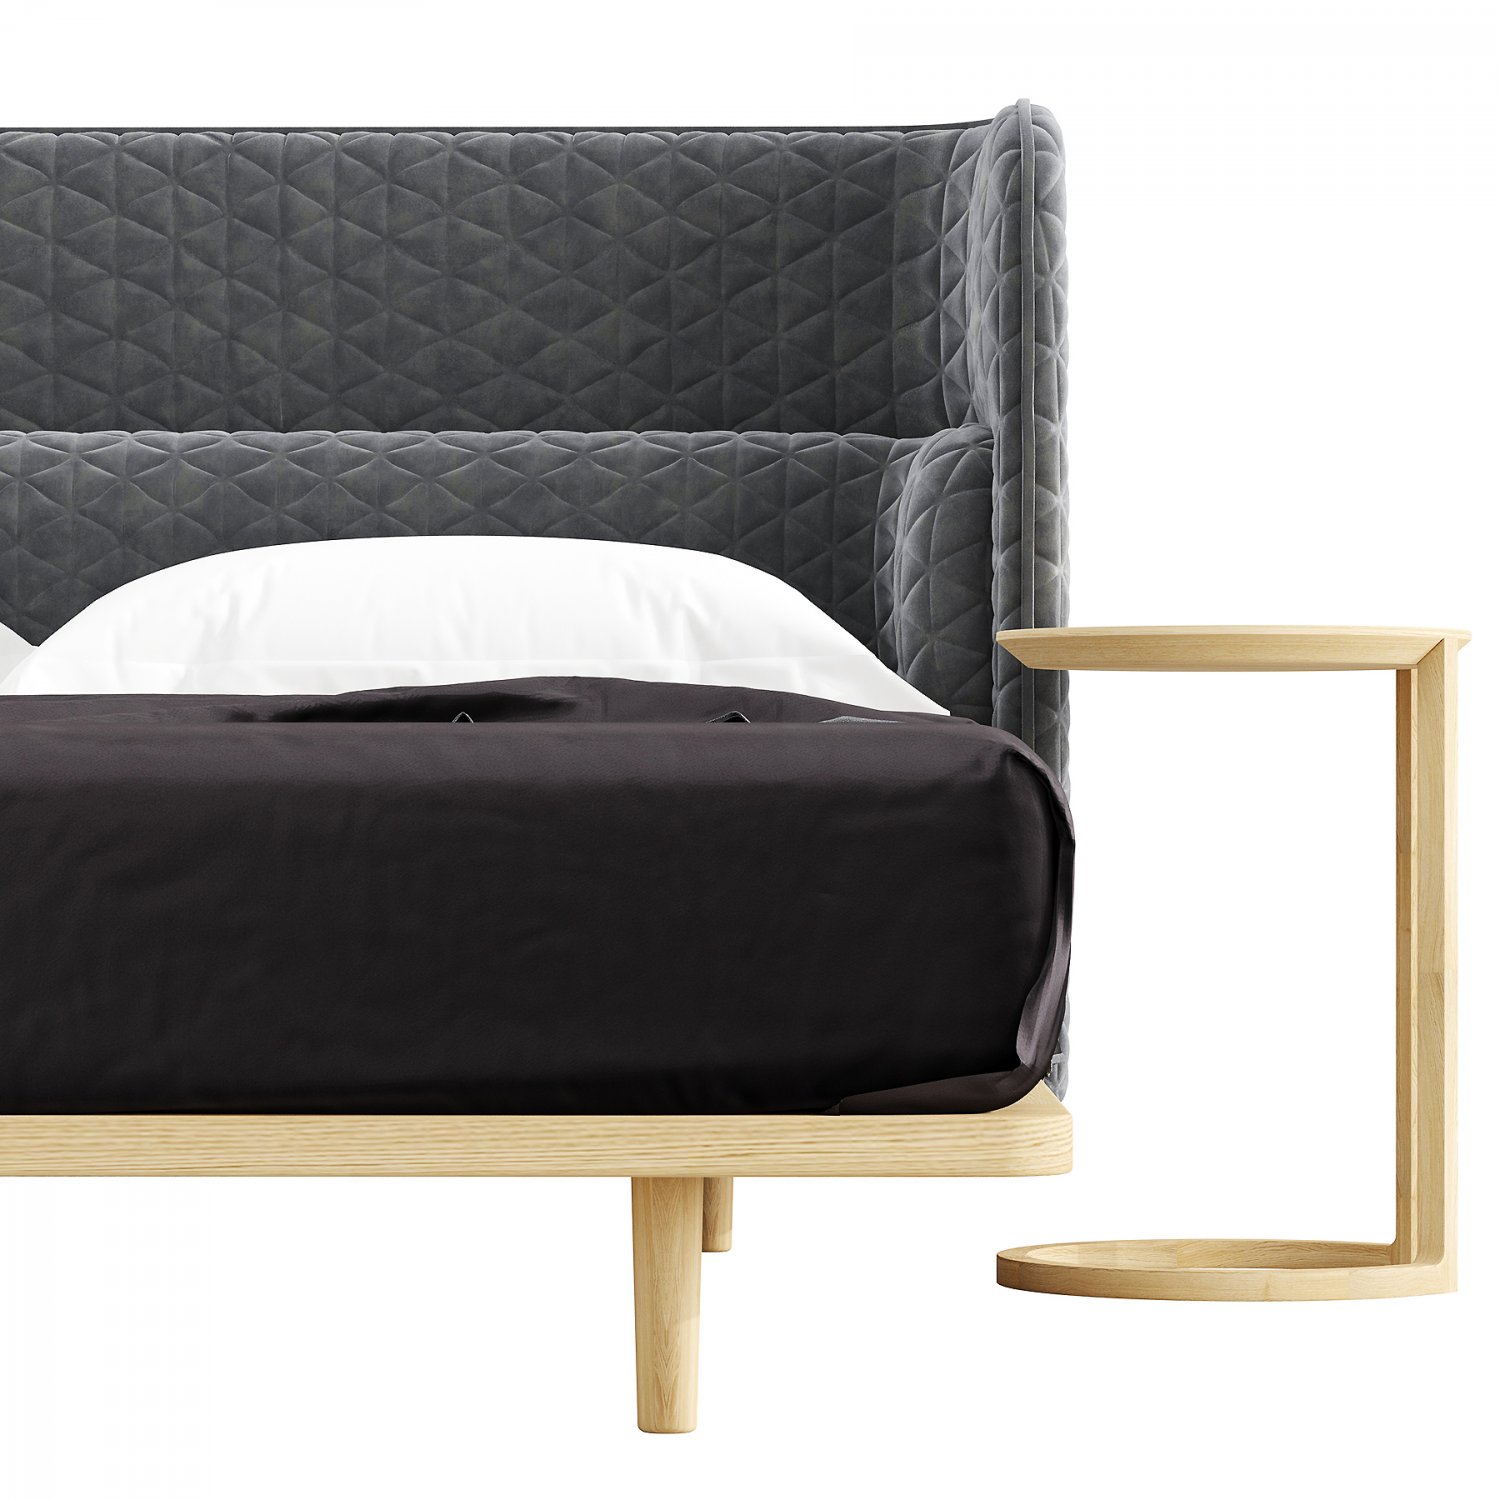 Bed of Nau Design Name: Aran Bed Units: Millimeters Dimensions: 2660x1100x2...